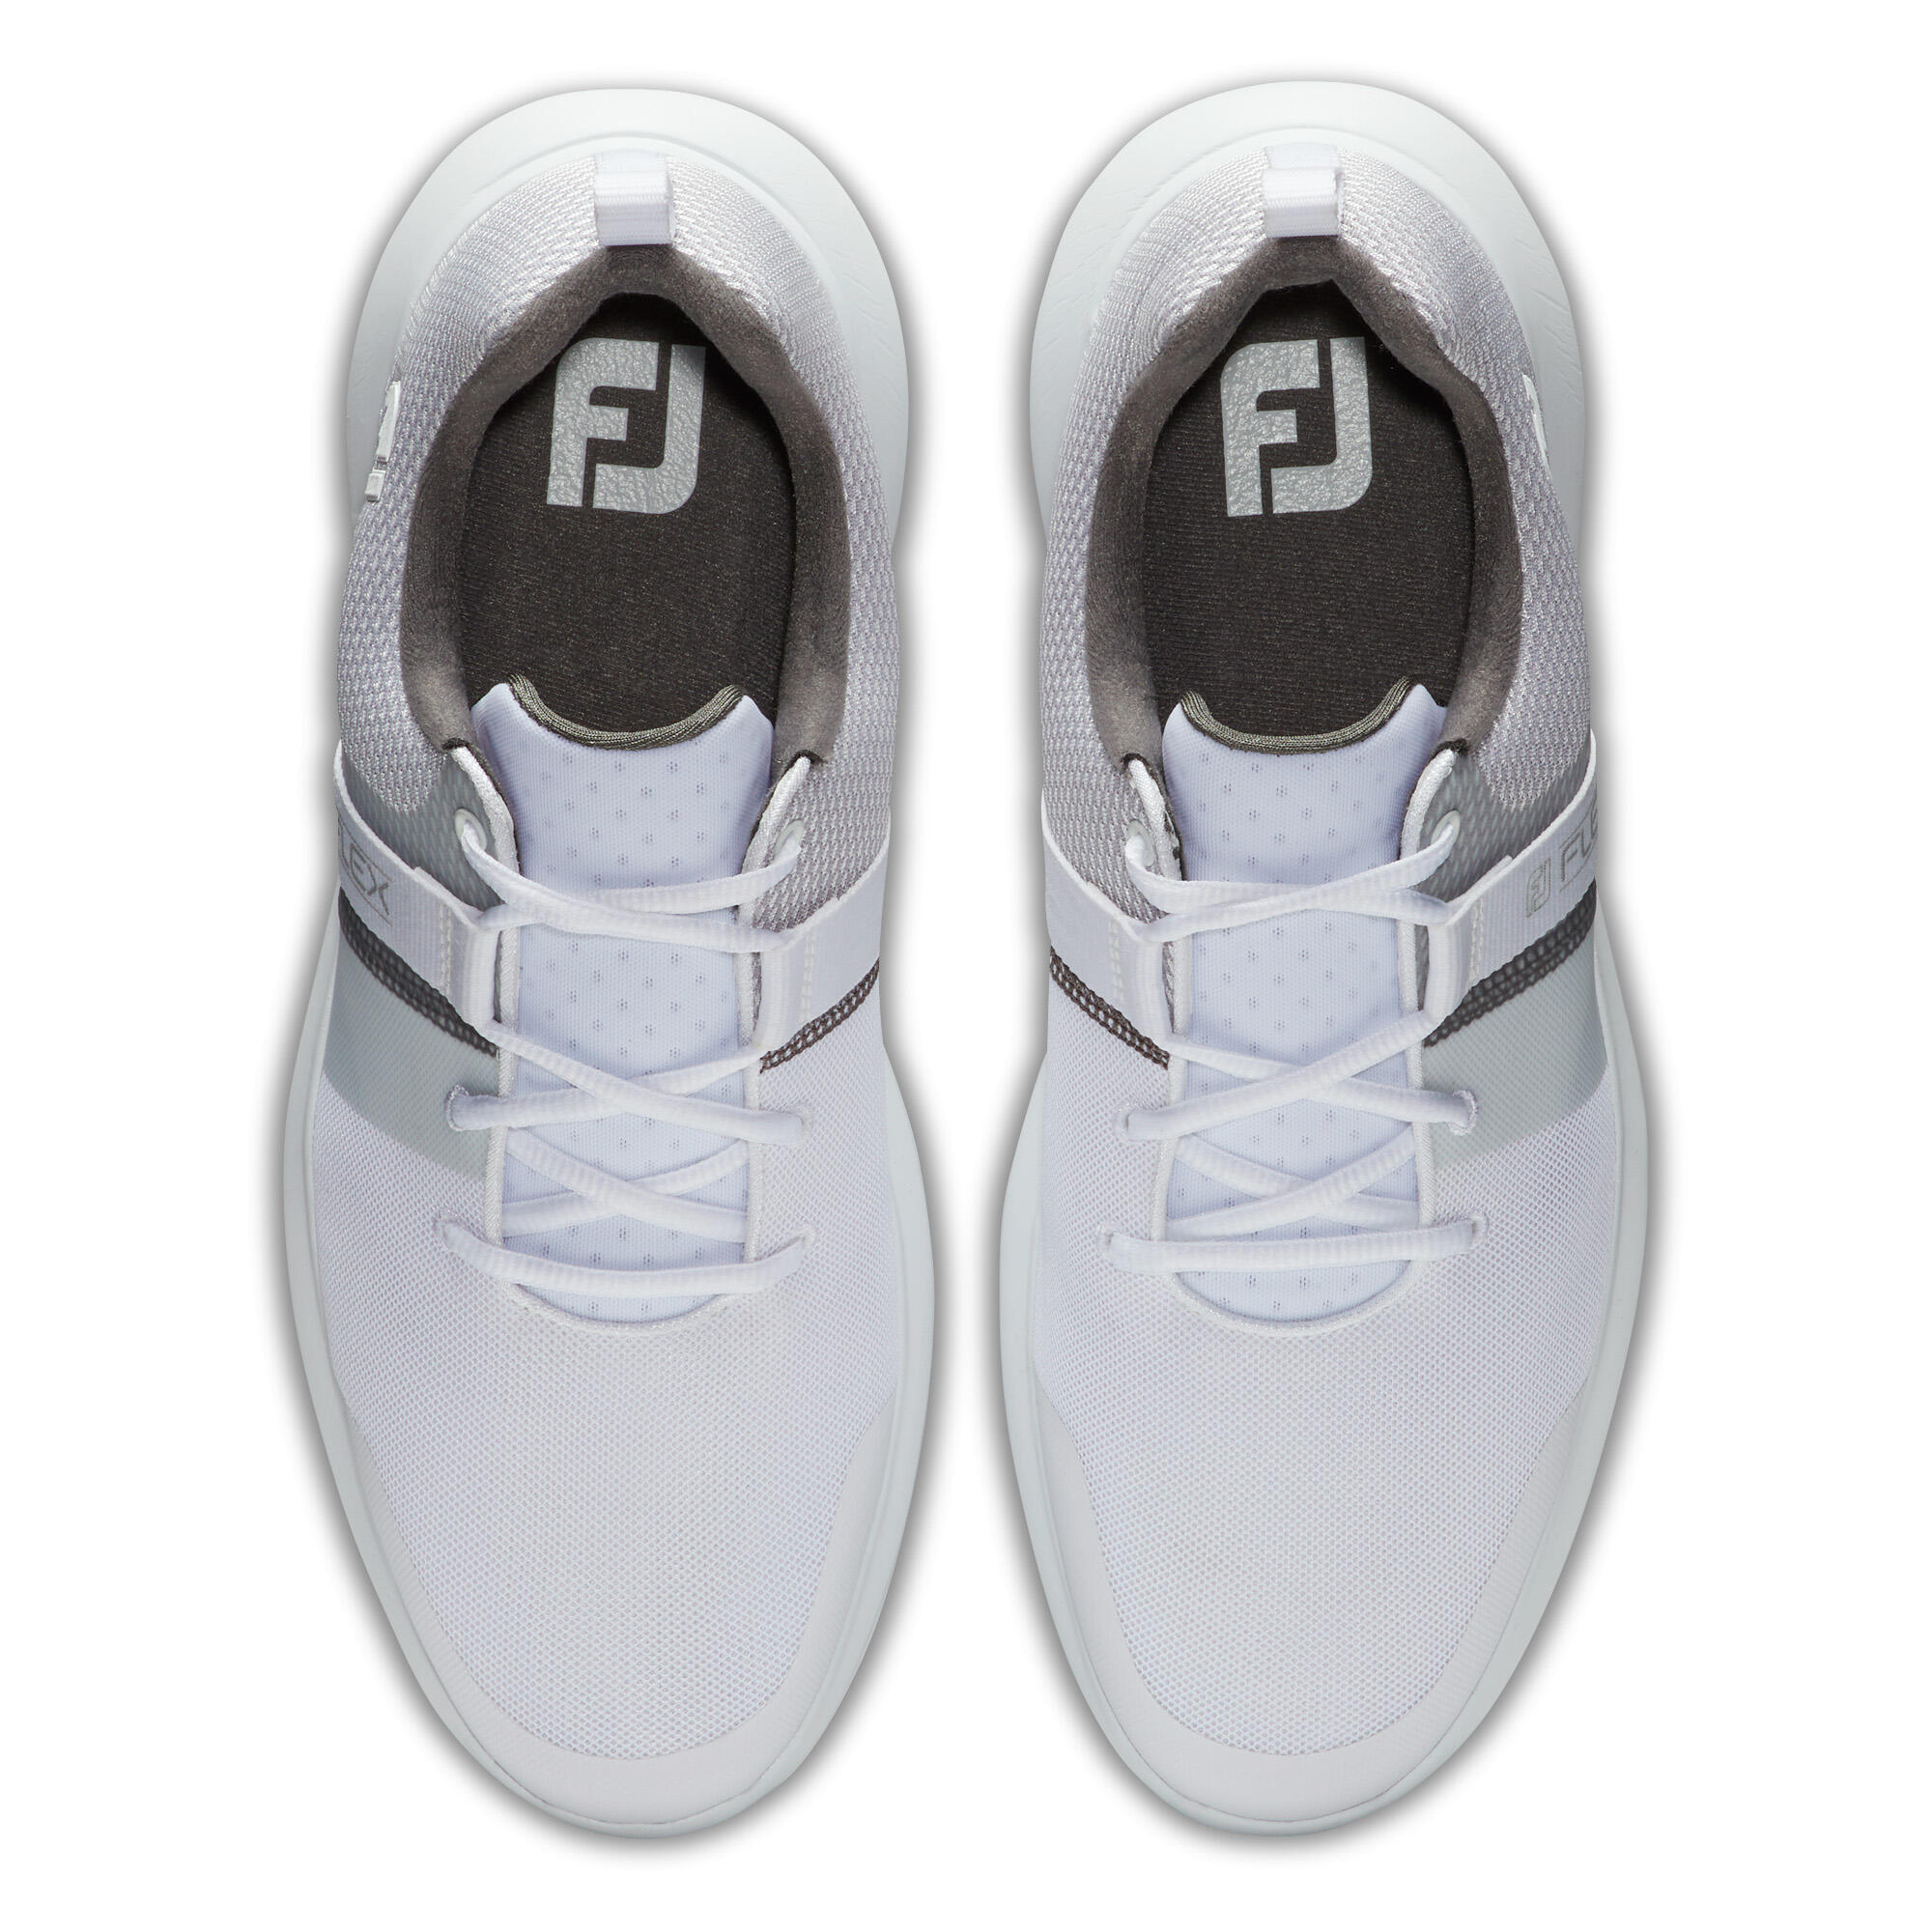 Men’s golf shoes FJ Flex - white and grey 5/6